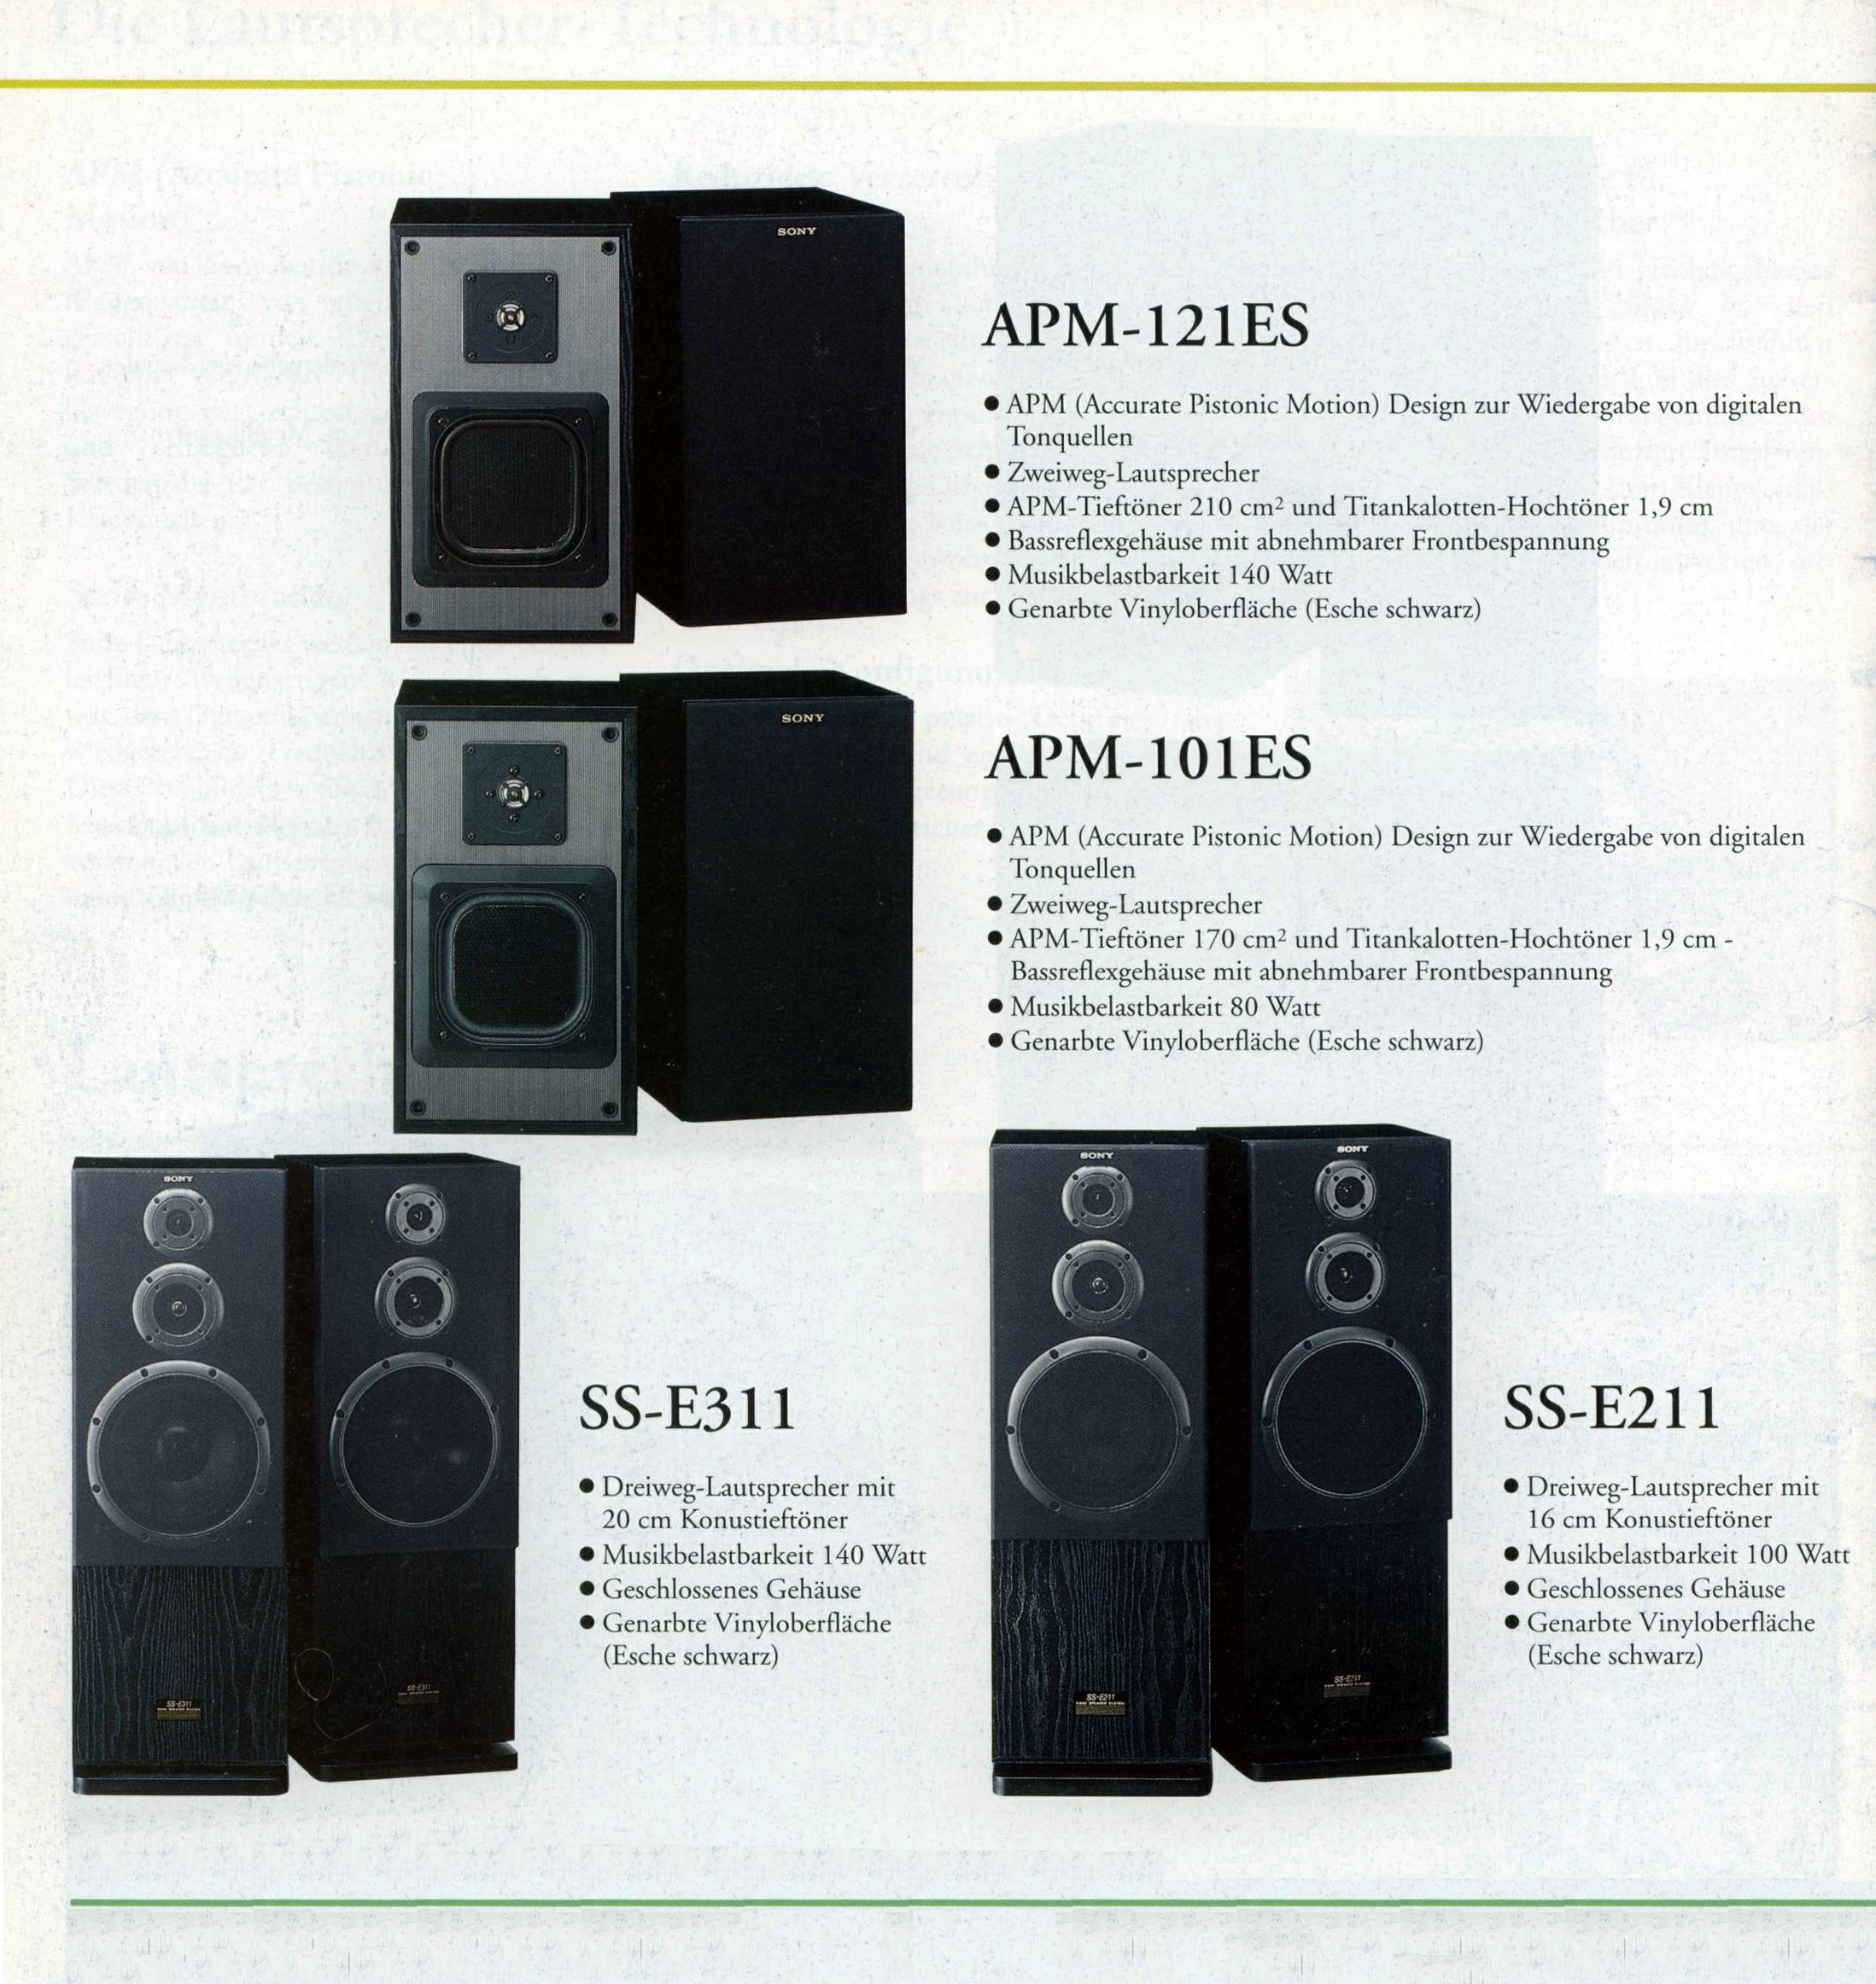 Sony APM-101-121-SS-211-311-Prospekt-1991.jpg